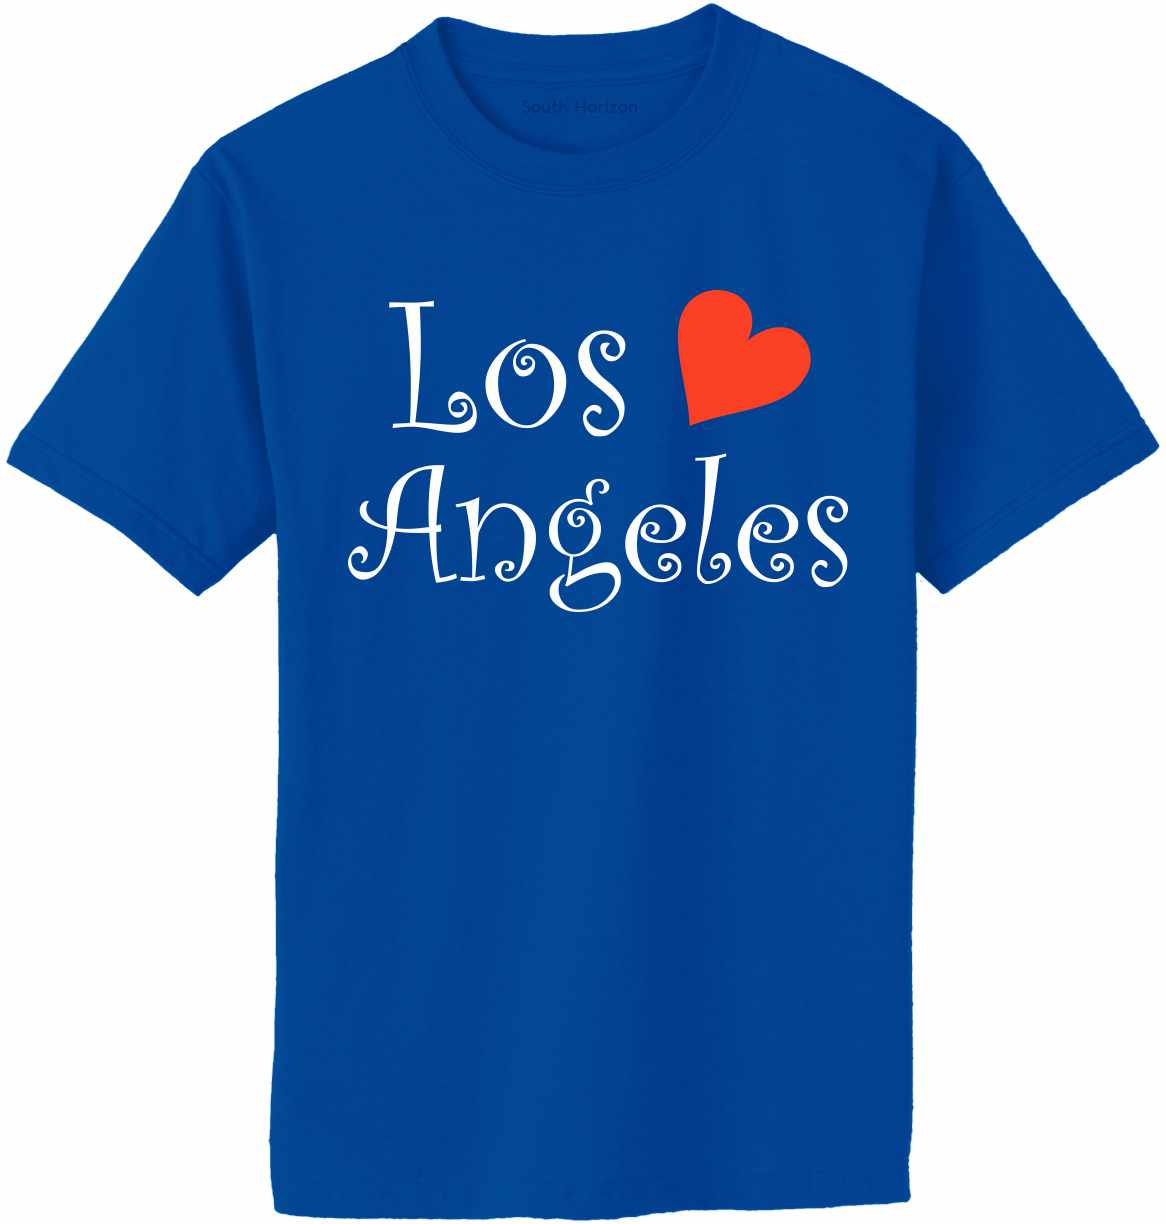 Los Angeles on Adult T-Shirt